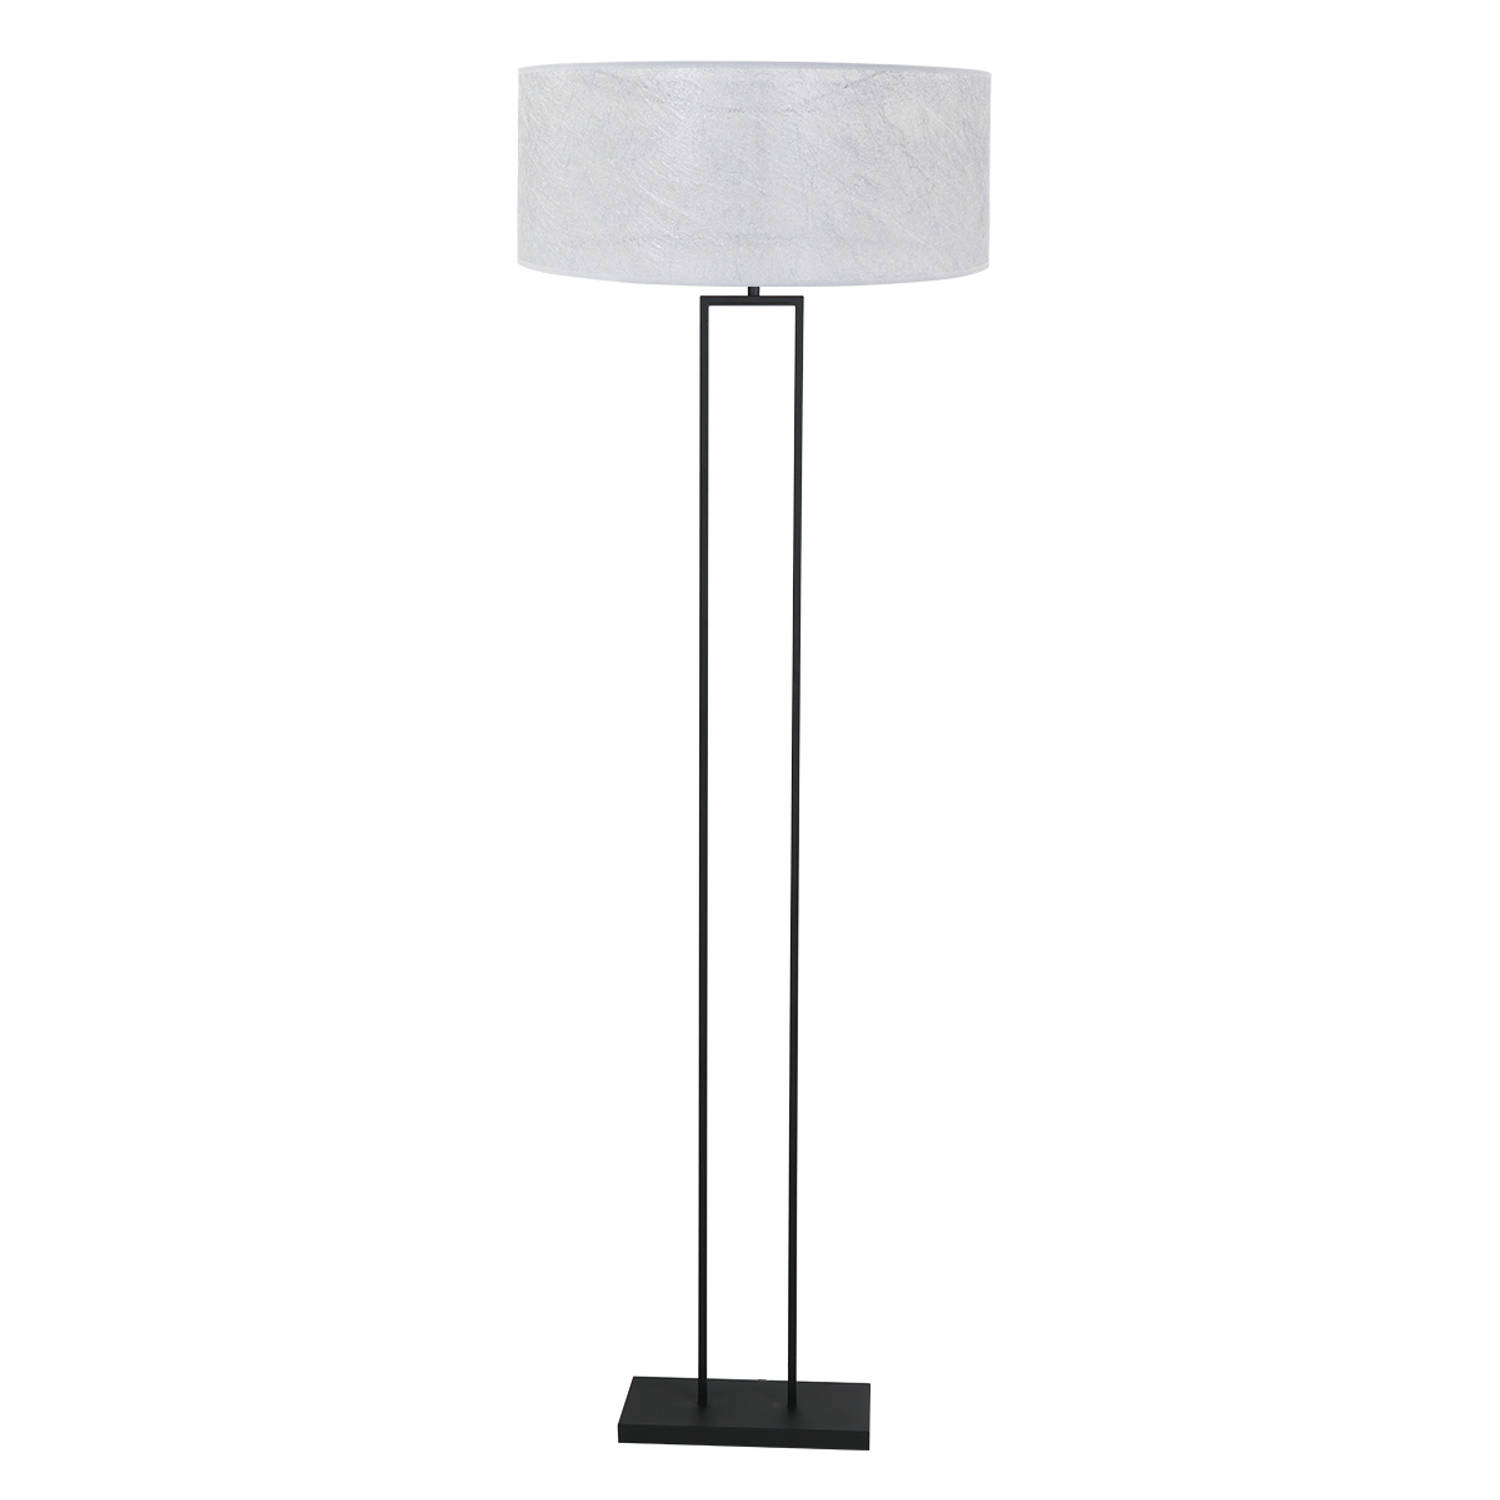 Vloerlamp Stang | 1-lichts | wit / zwart | E27 | moderne staande lamp | woonkamer / slaapkamer | groot fitting design